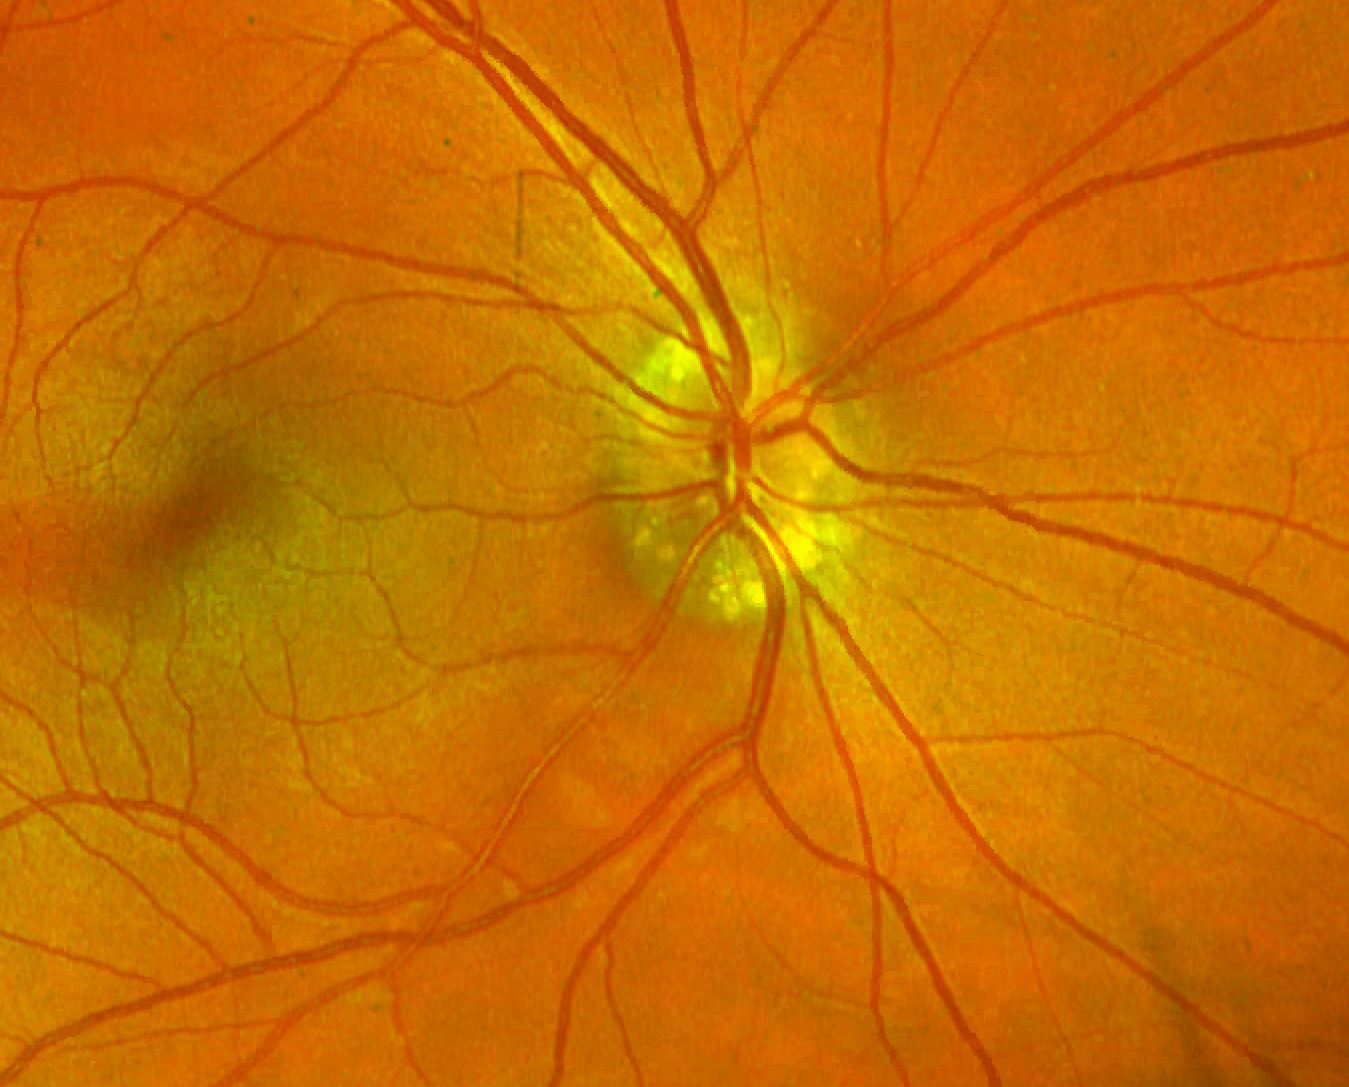 Fundus photo revealing pseudo papilledema from optic nerve head drusen